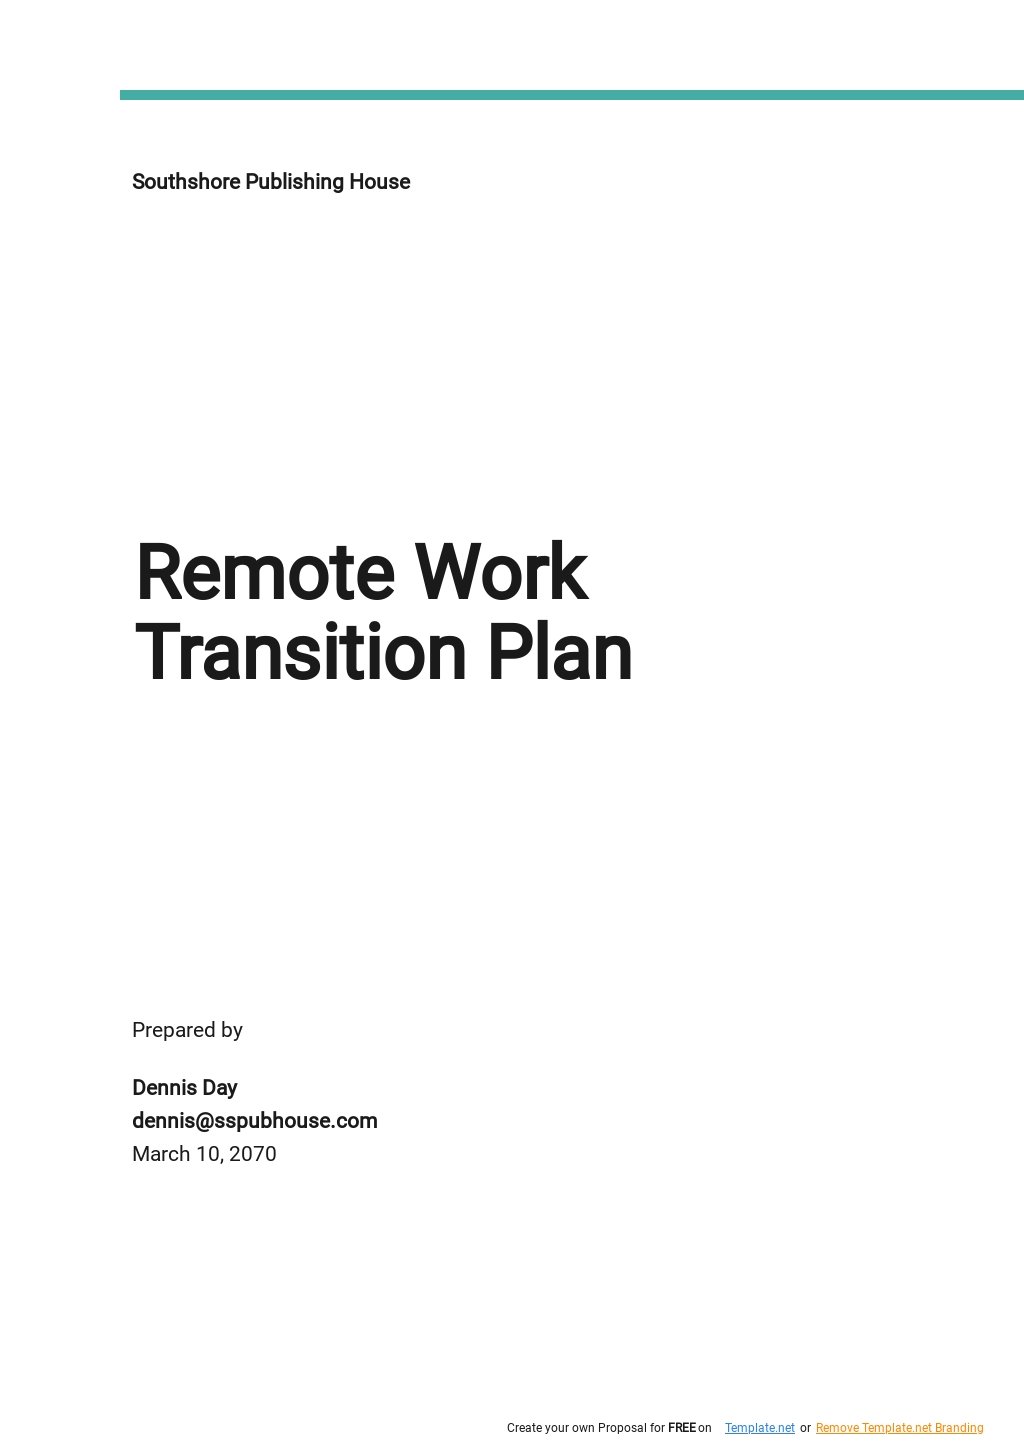 Remote Work Transition Plan Template.jpe